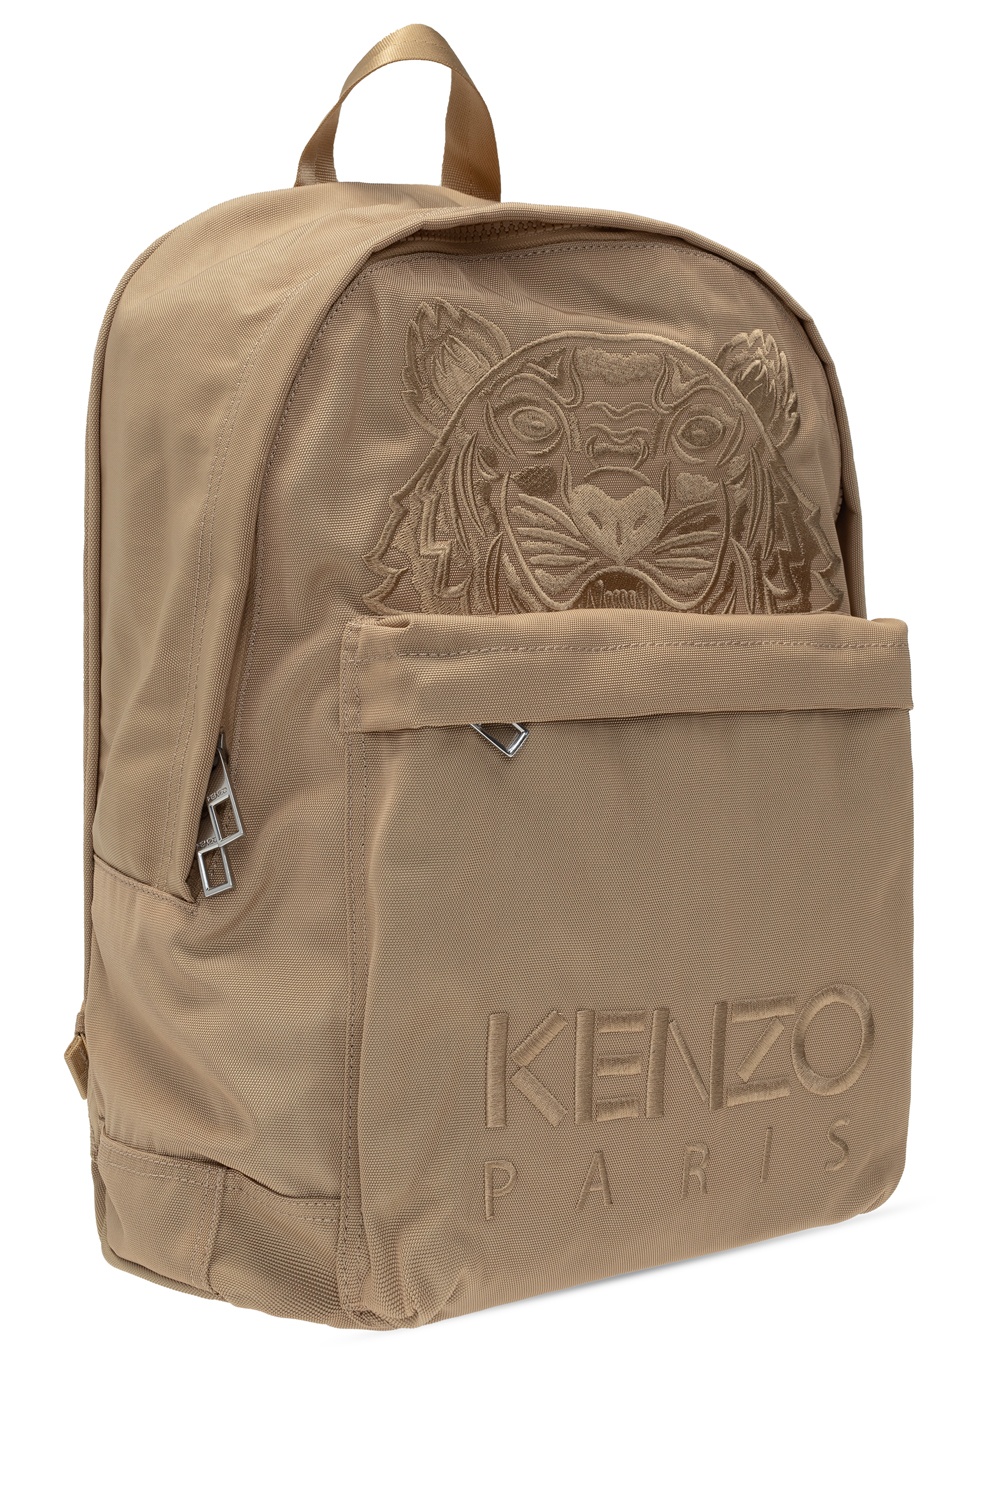 Kenzo Backpack RIEKER H1398-31 Beige Kombi